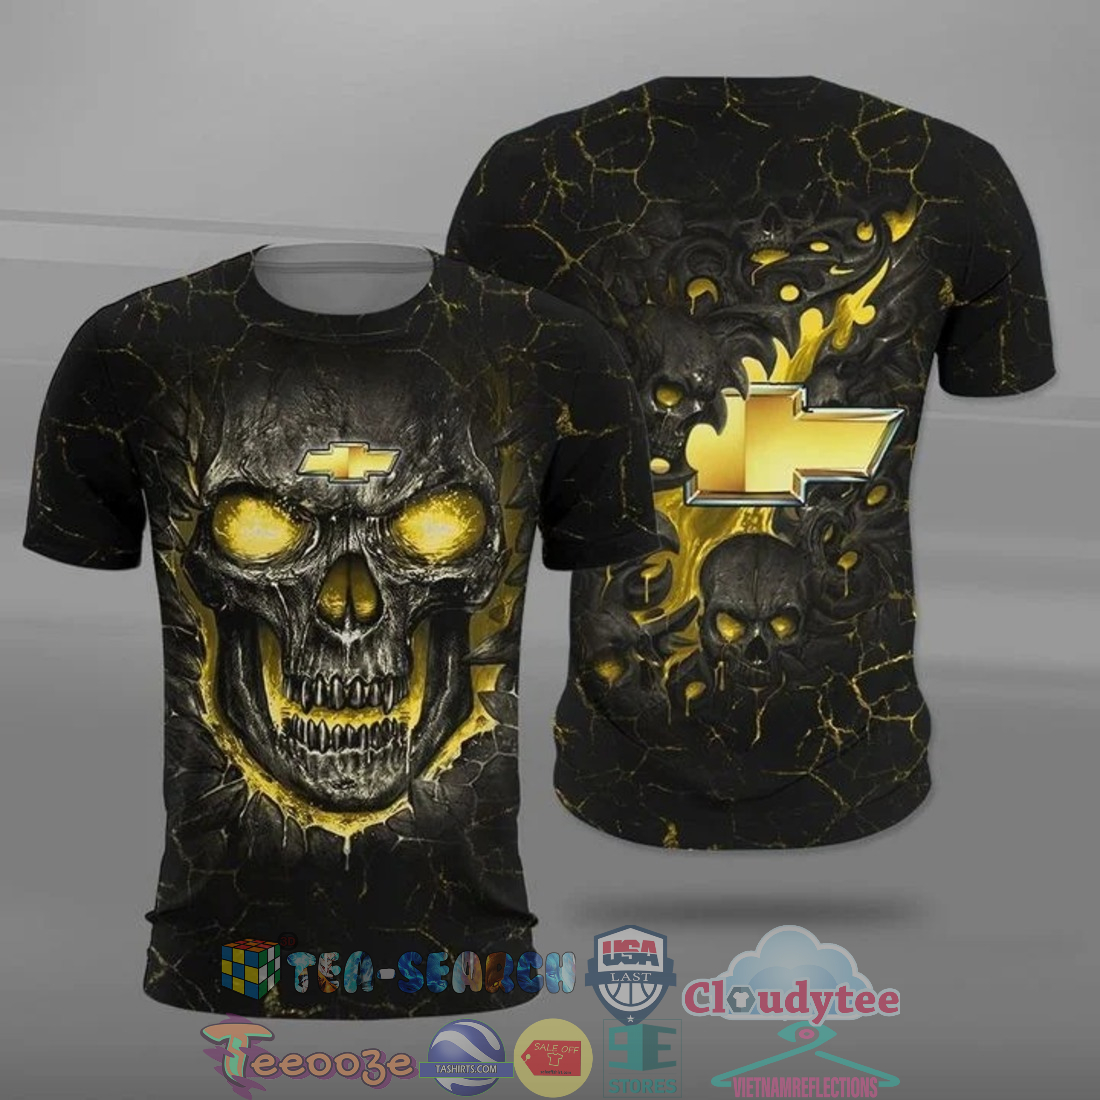 Chevrolet skull ver 2 all over printed t-shirt hoodie